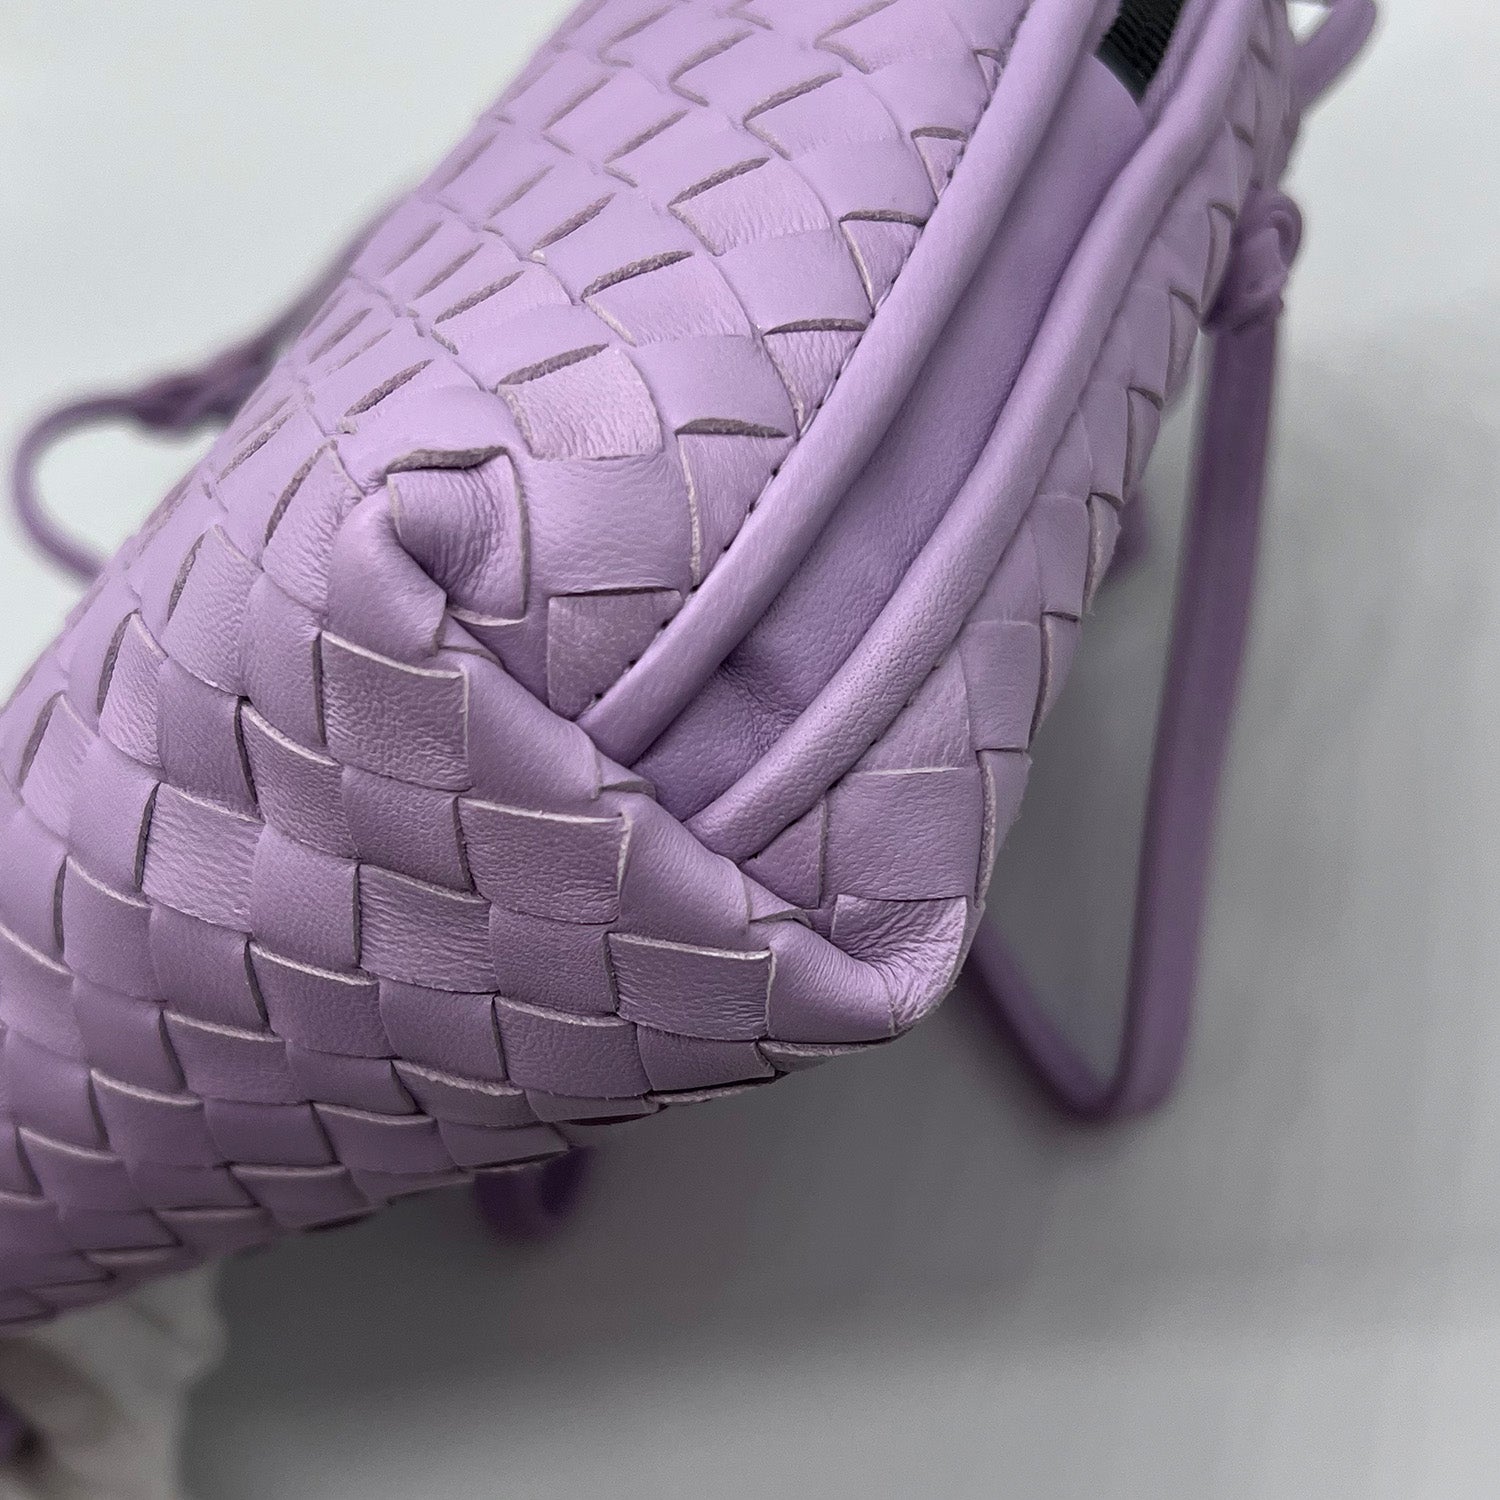 Nodini leather crossbody bag Bottega Veneta Pink in Leather - 29442082